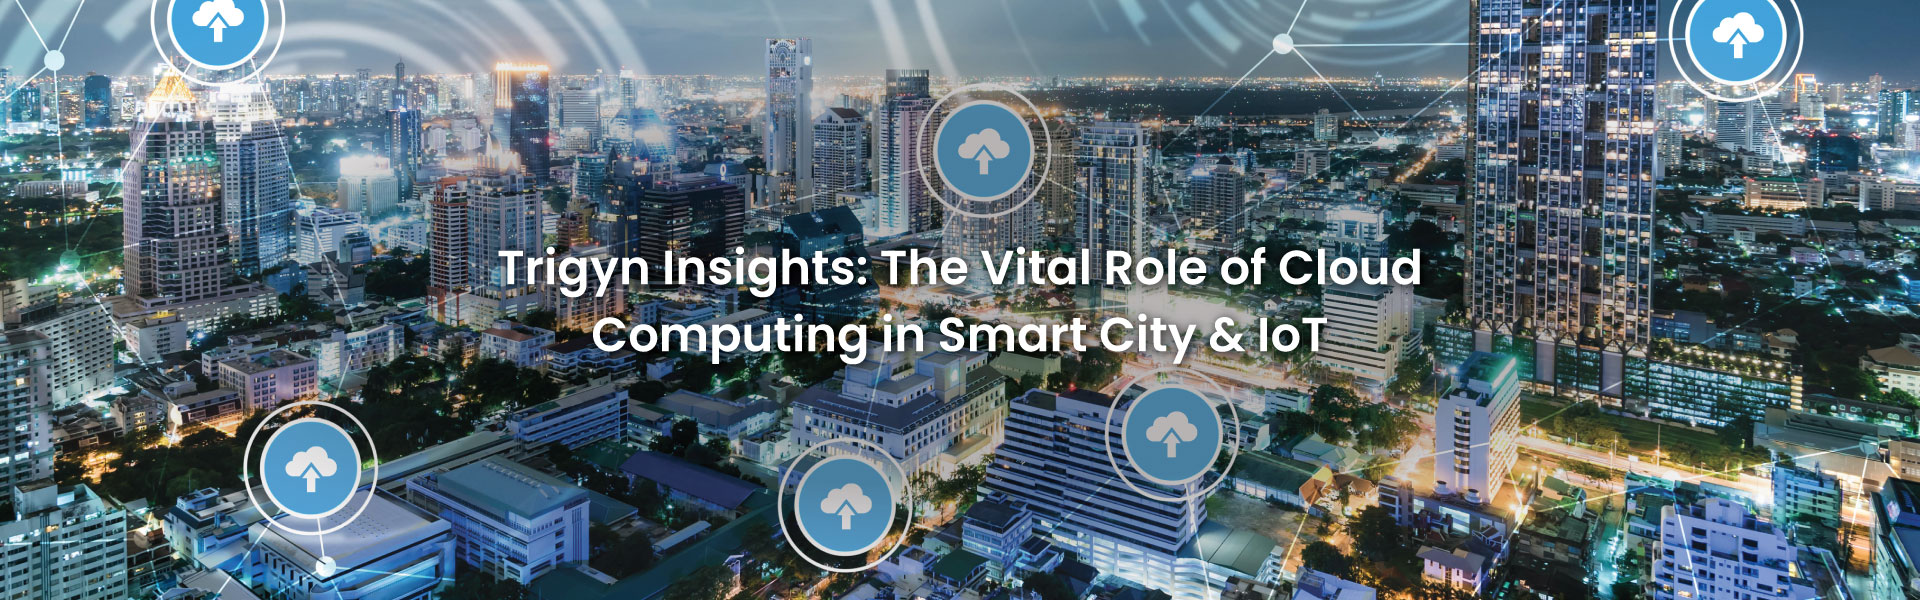 Cloud Computing in Smart City